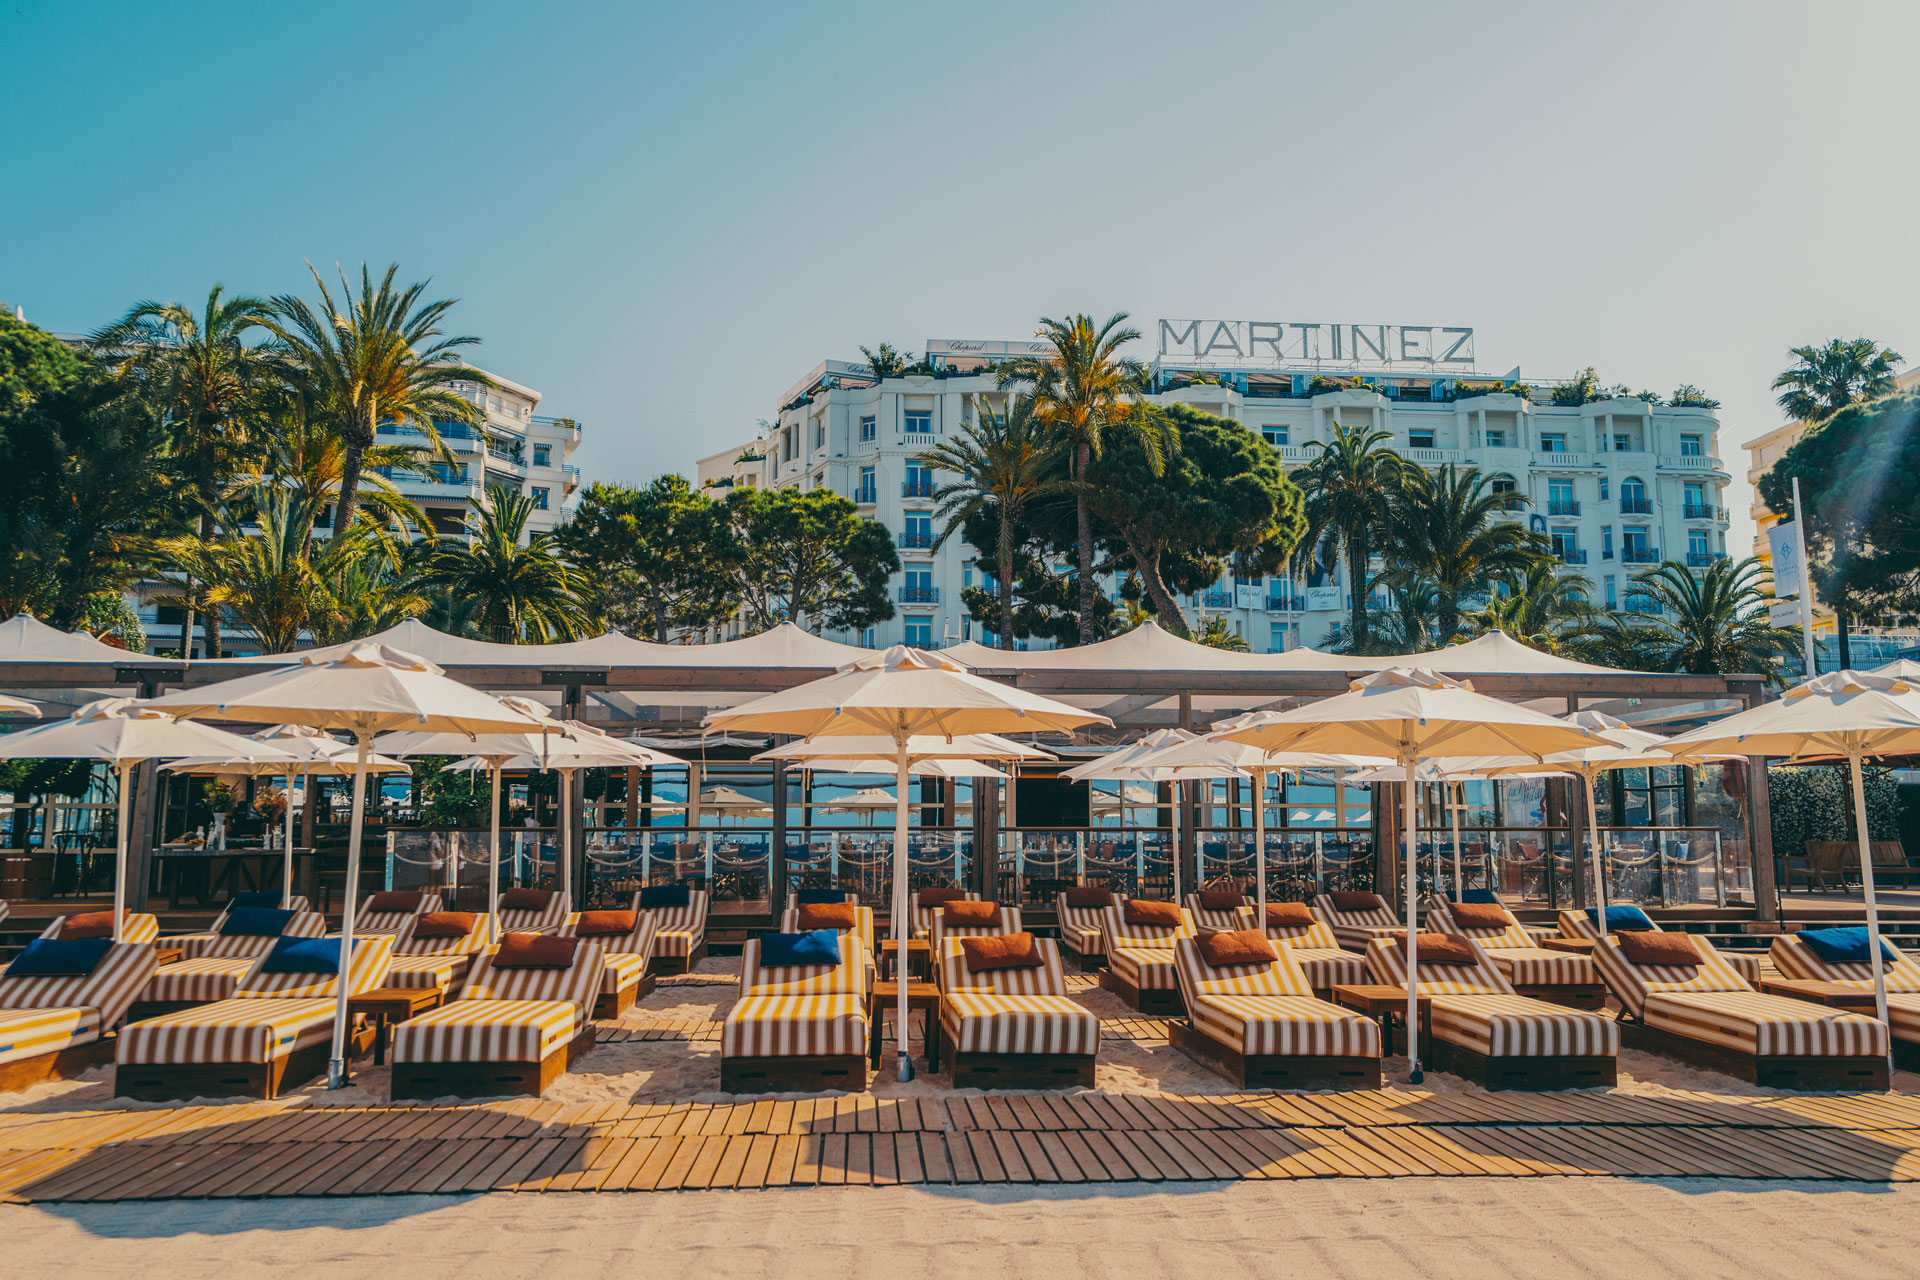 Hotel Martinez beach area, with orange striped parasols.